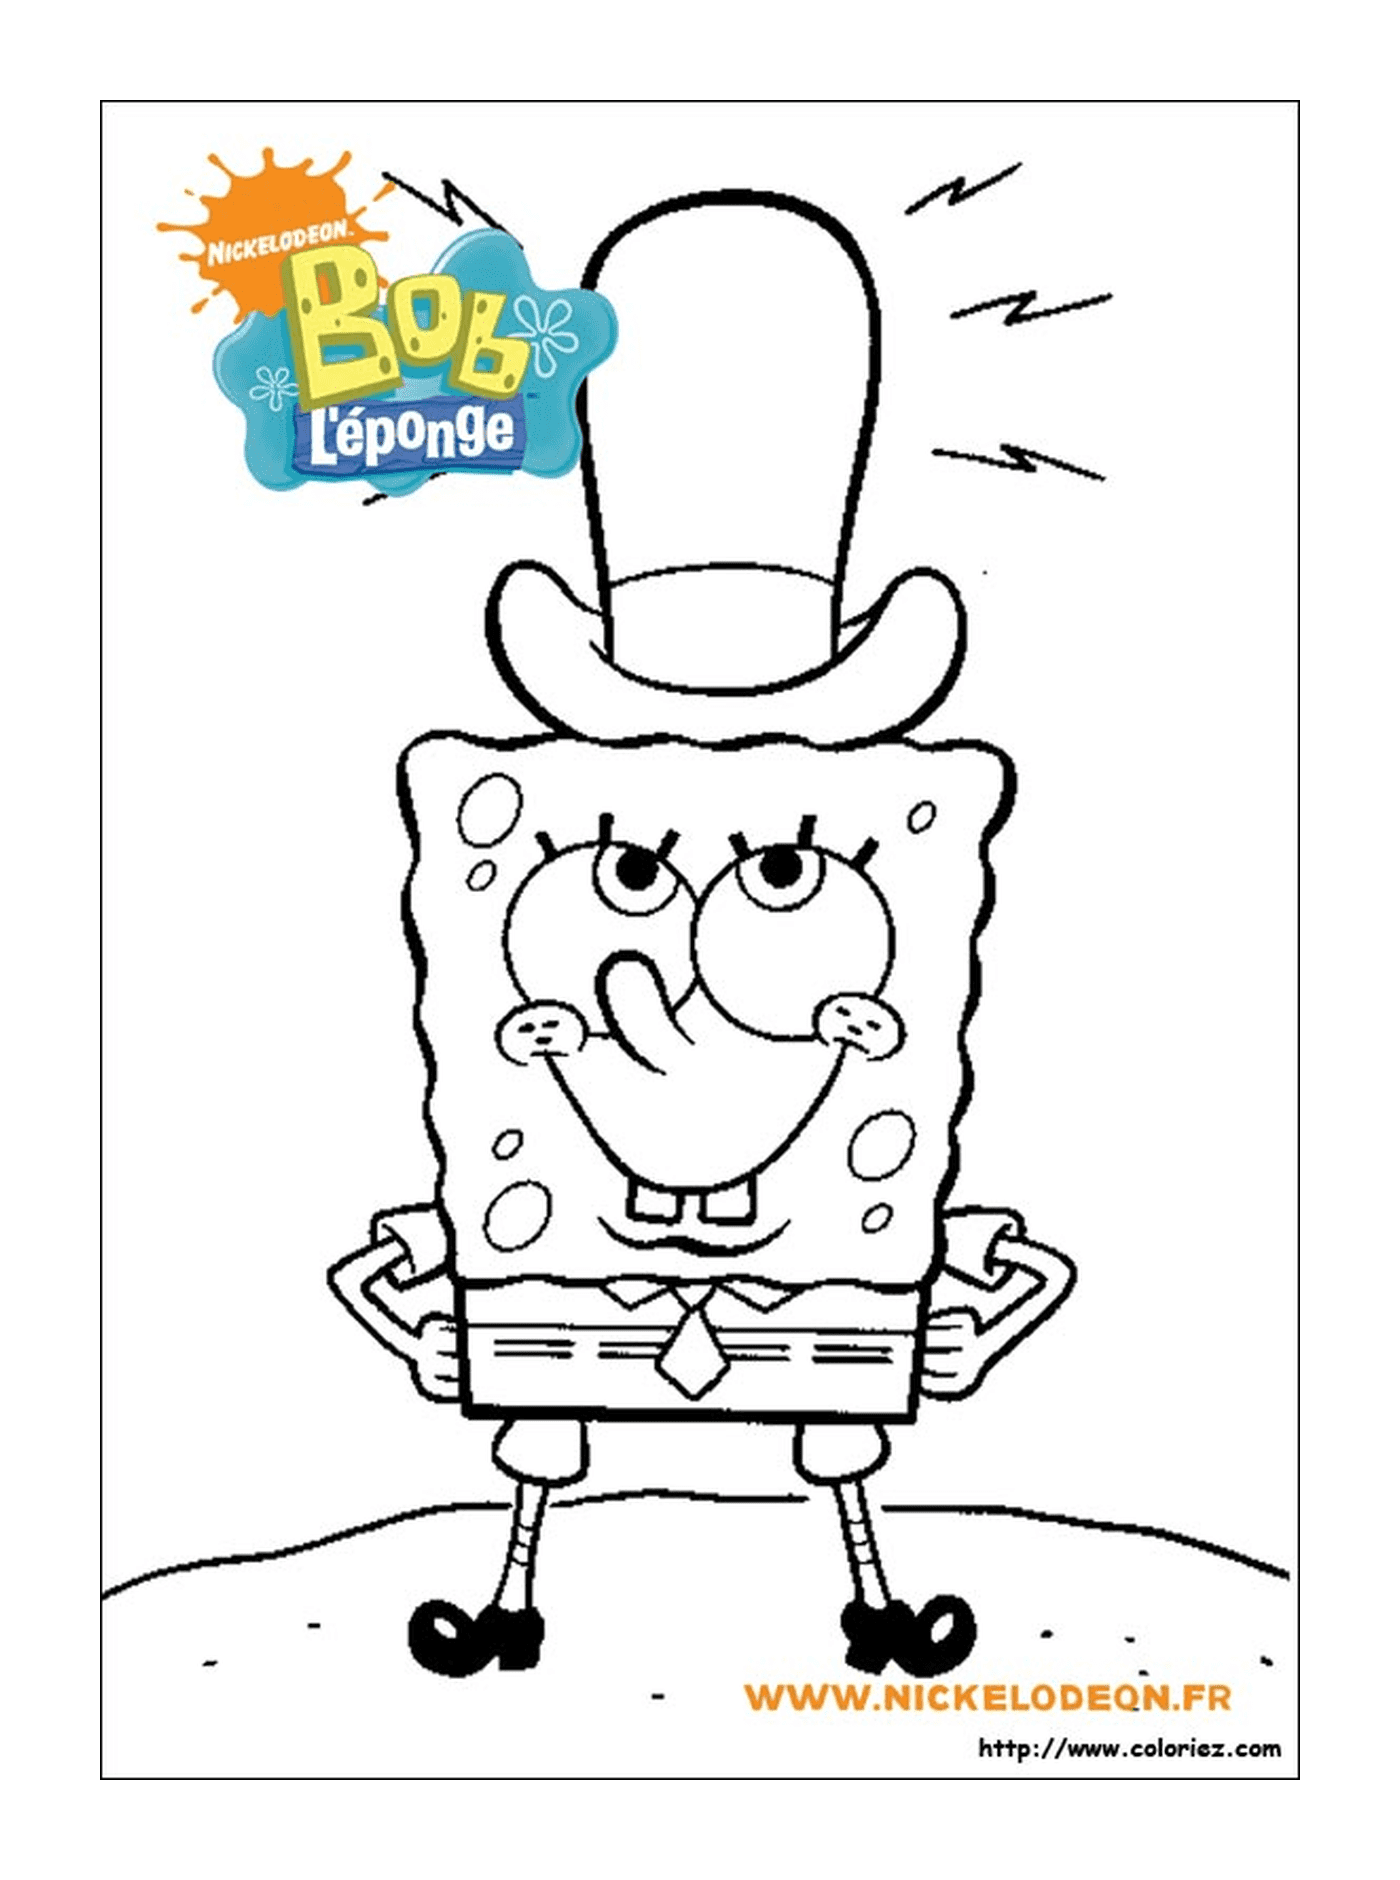  A Spongebob wearing a top-of-the-shape 